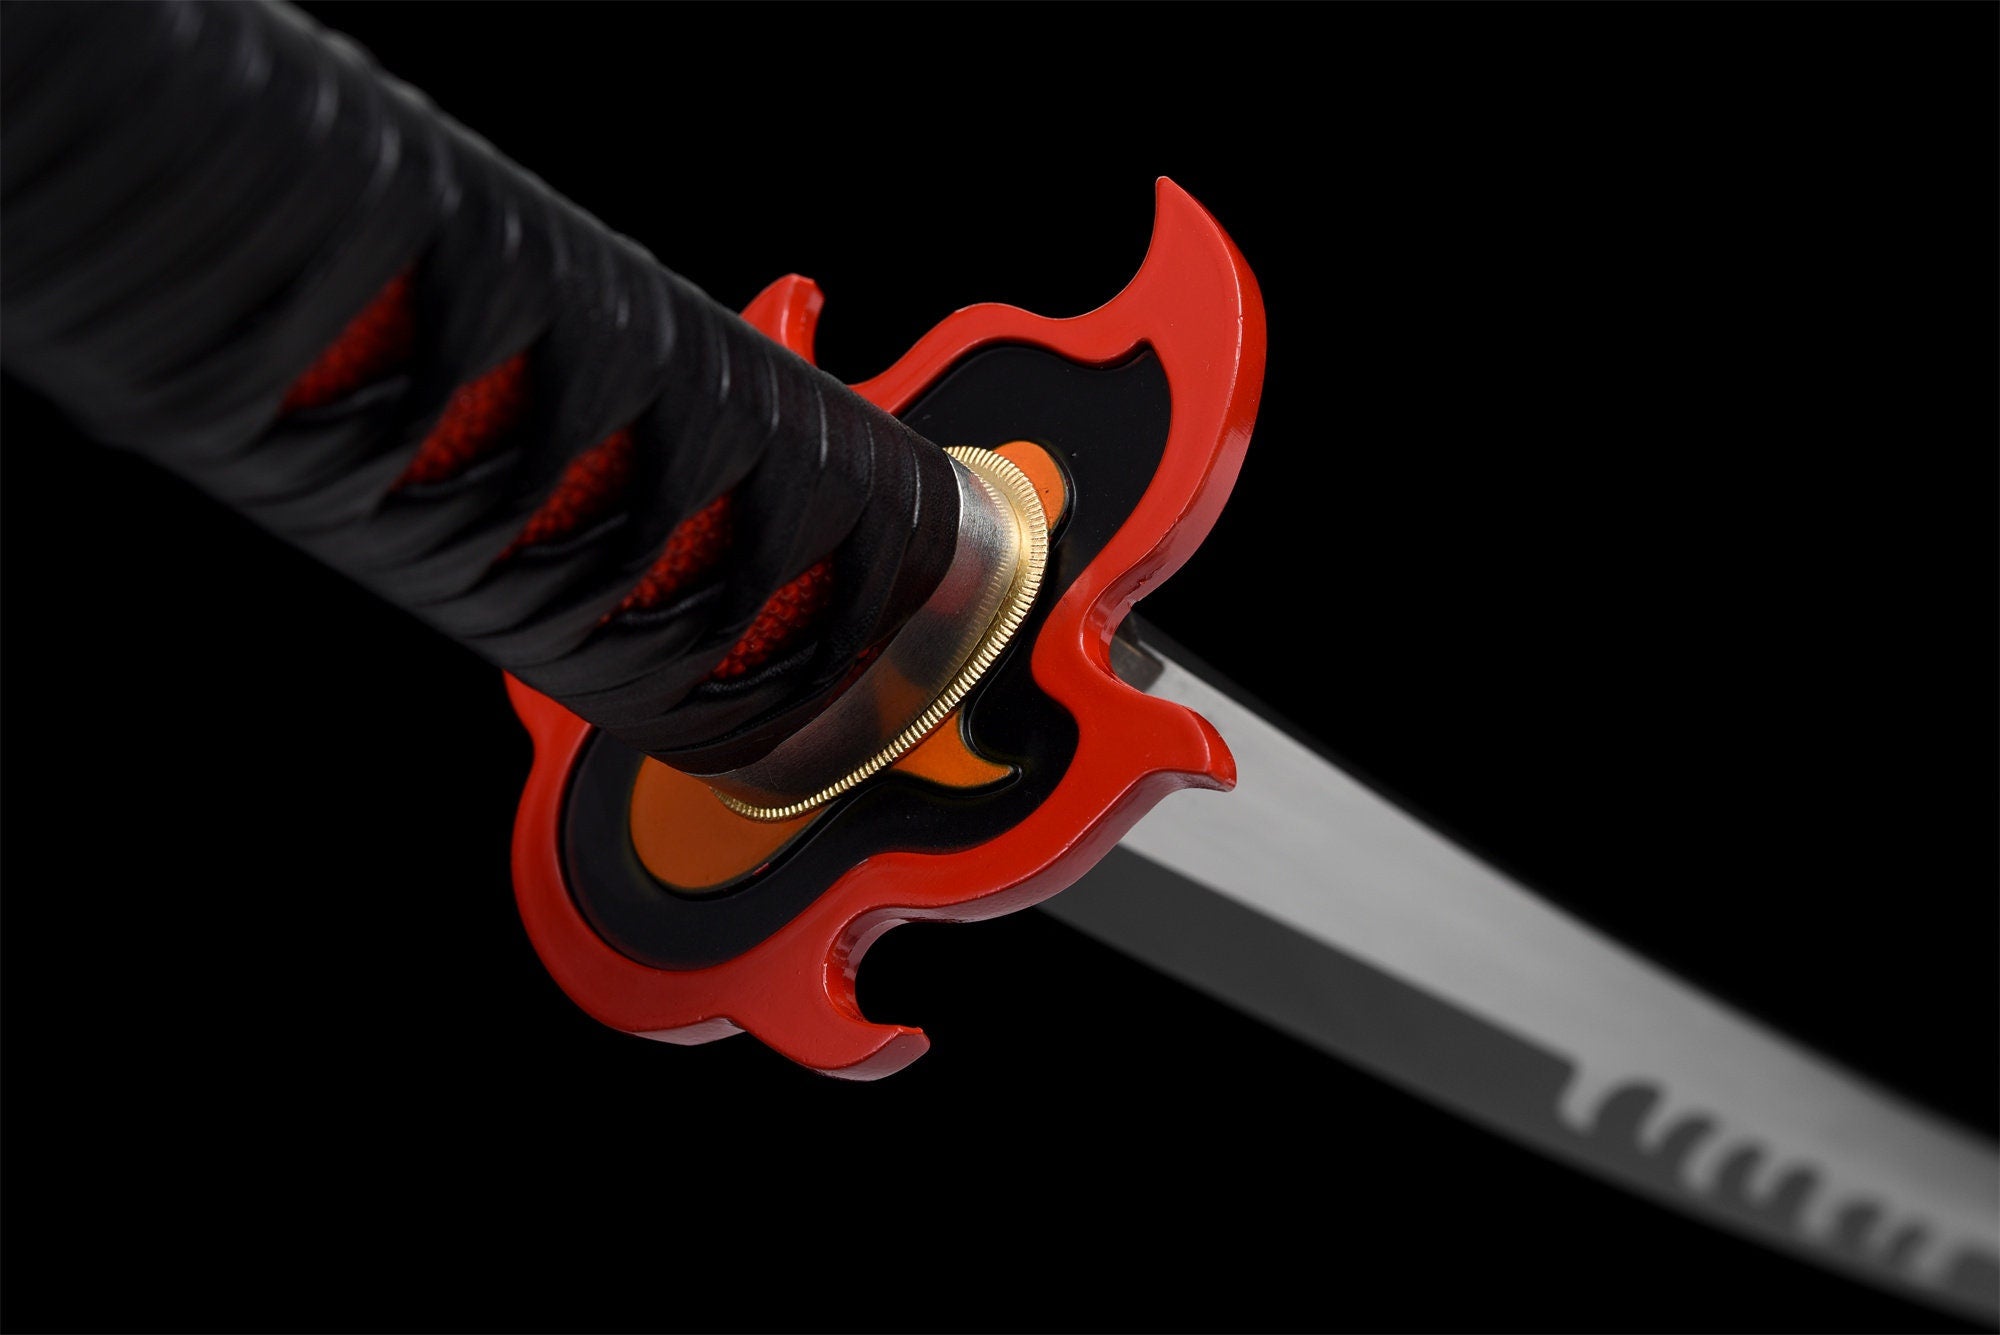 Black Anime Sword,Katana Sharp,Real Japanese Samurai Sword,Handmade Anime Katana,Full Tang,High-carbon steel